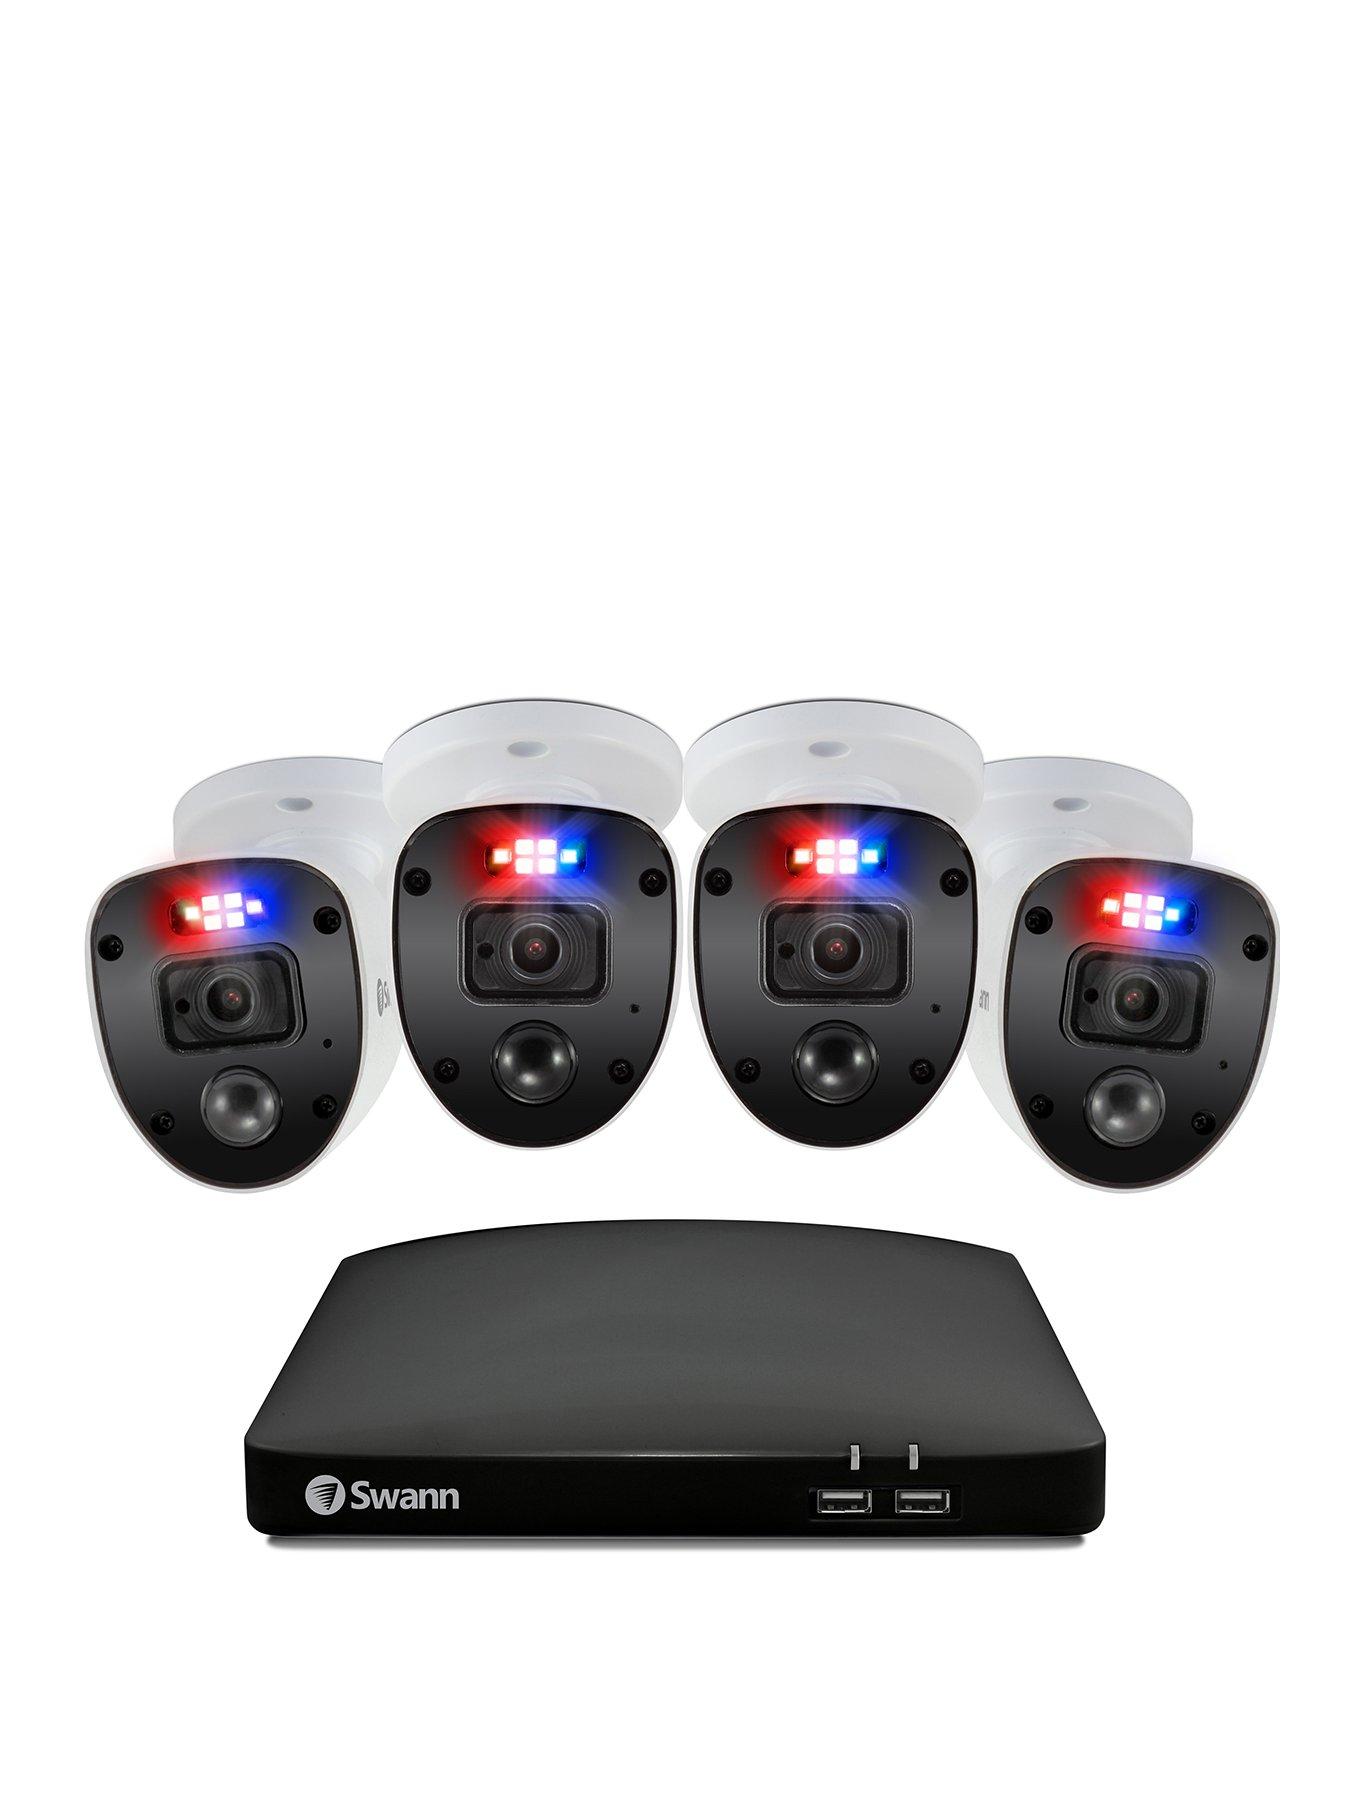 Swann Smart Security Cctv System: 8 Chl 1080P 1Tb Hdd Dvr, 4 X Pro Enforcer Camera. Works With Alexa, Google Assistant  Swann Security - Swdvk-846804Sl-Eu - + 6 X Pro 1080P Camera